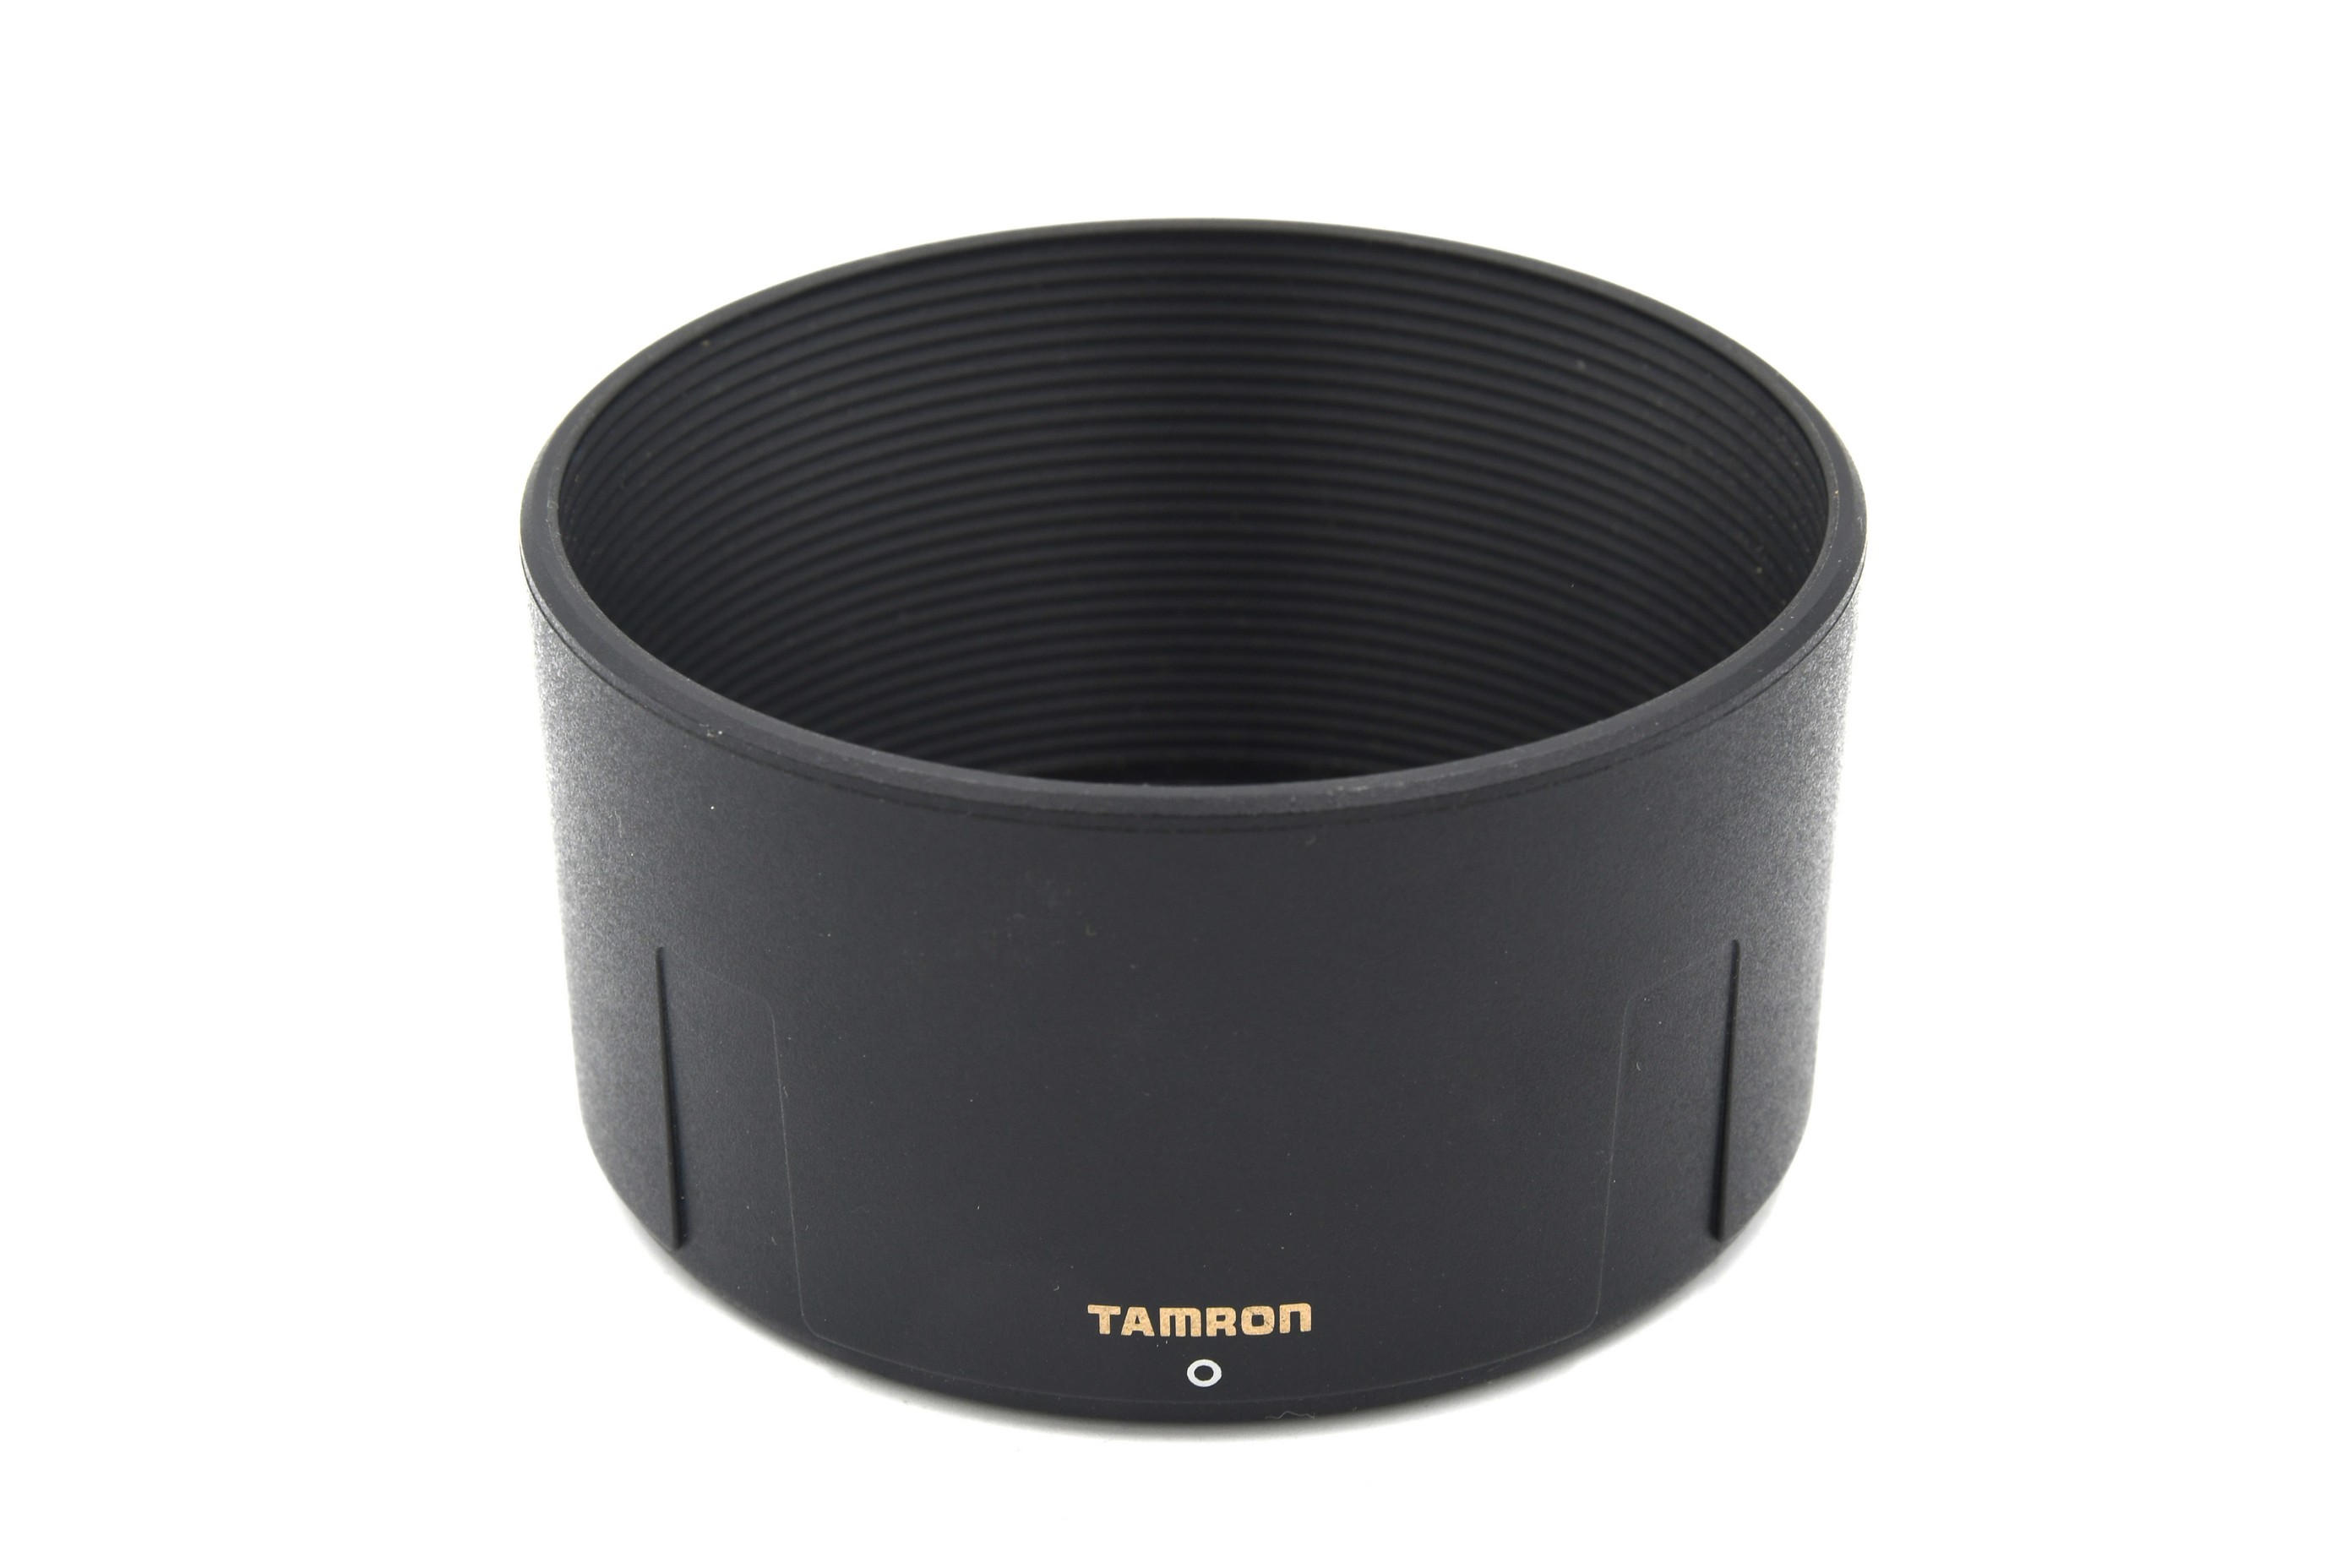  Tamron 2C9FH  90mm f/2.8 1:1 Macro ( 5)